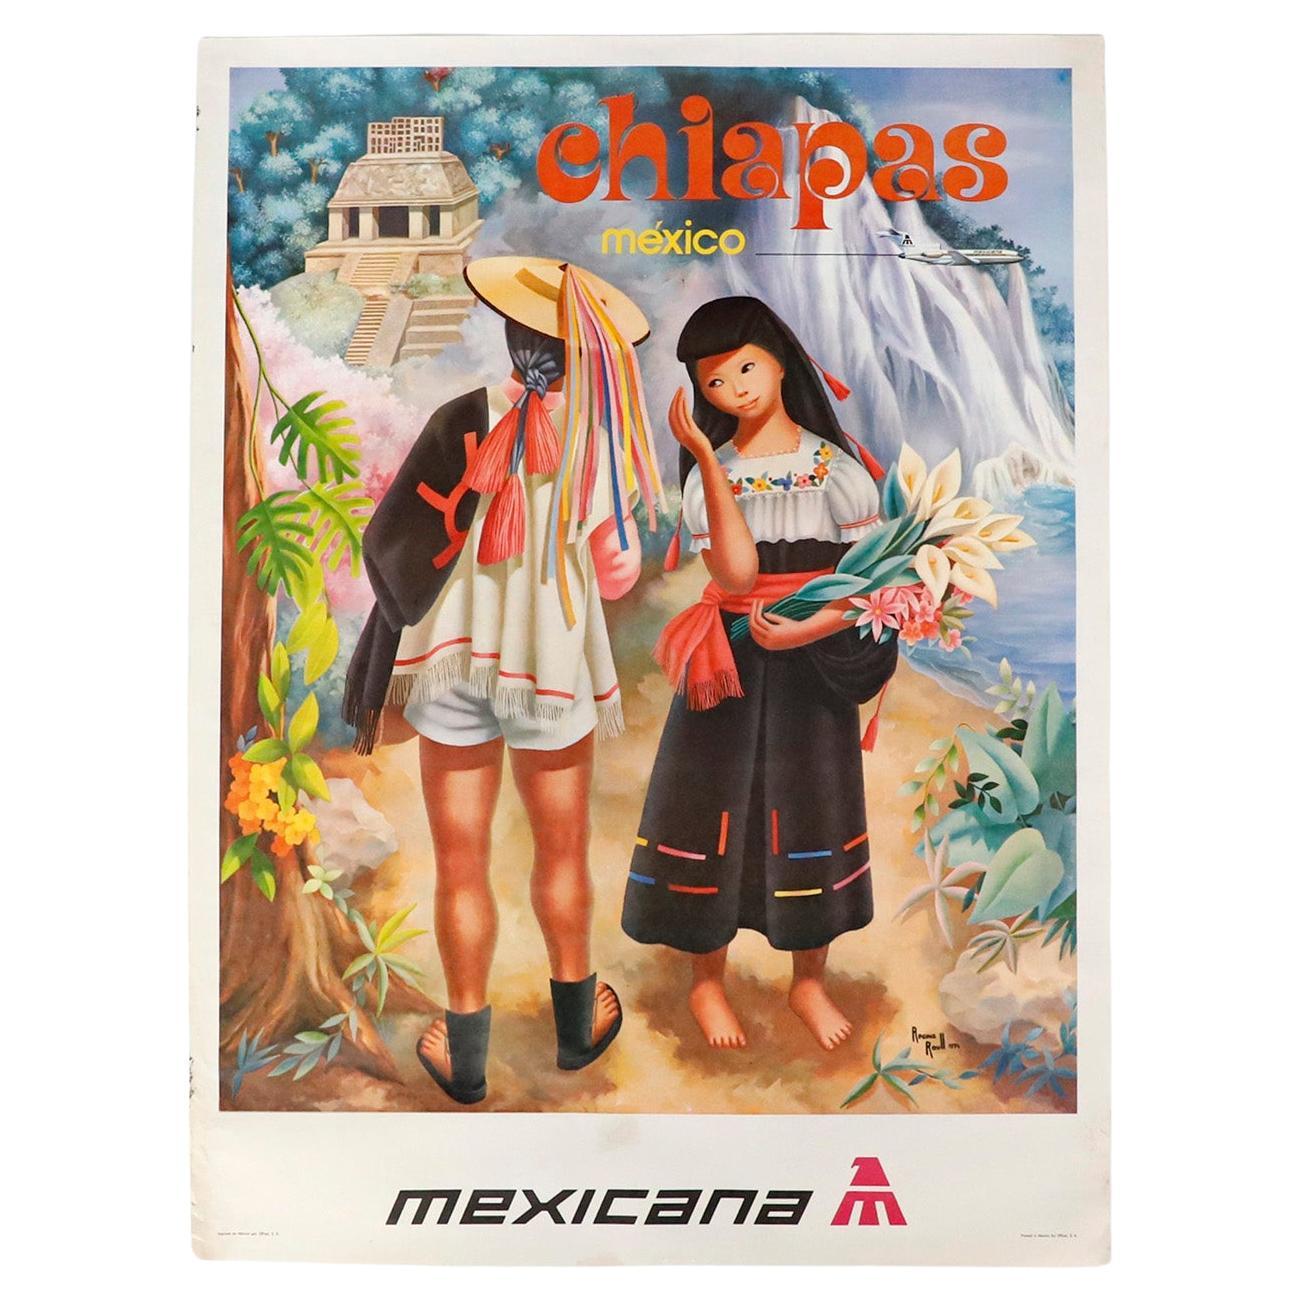 Original Chiapas, Mexicana Airlines Poster by Regina Raull